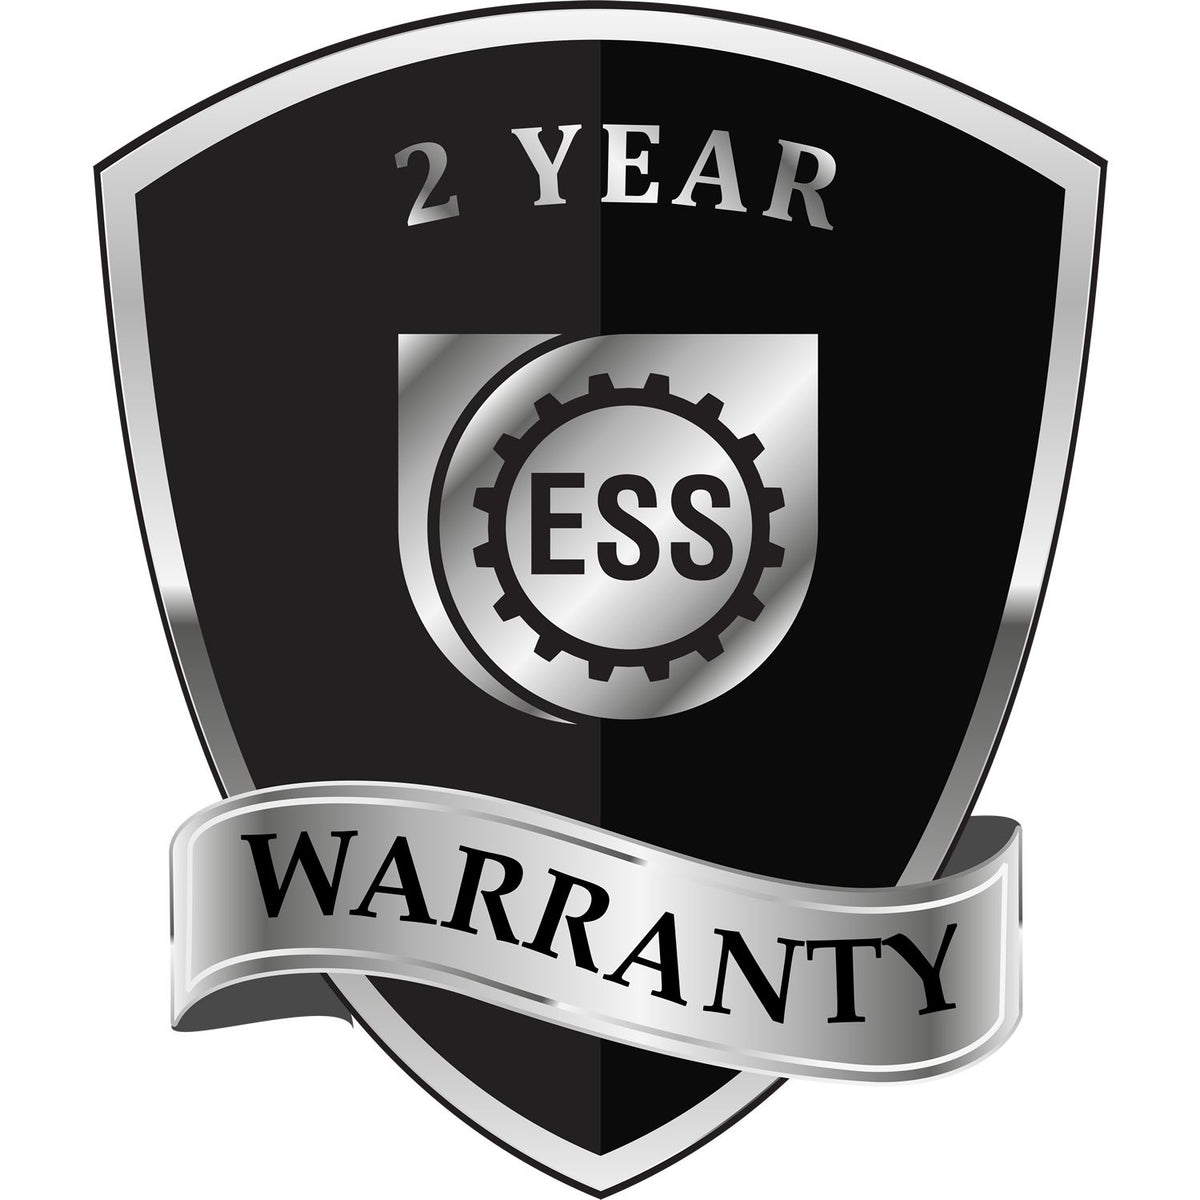 A black and silver badge or emblem showing warranty information for the Arkansas Geologist Desk Seal